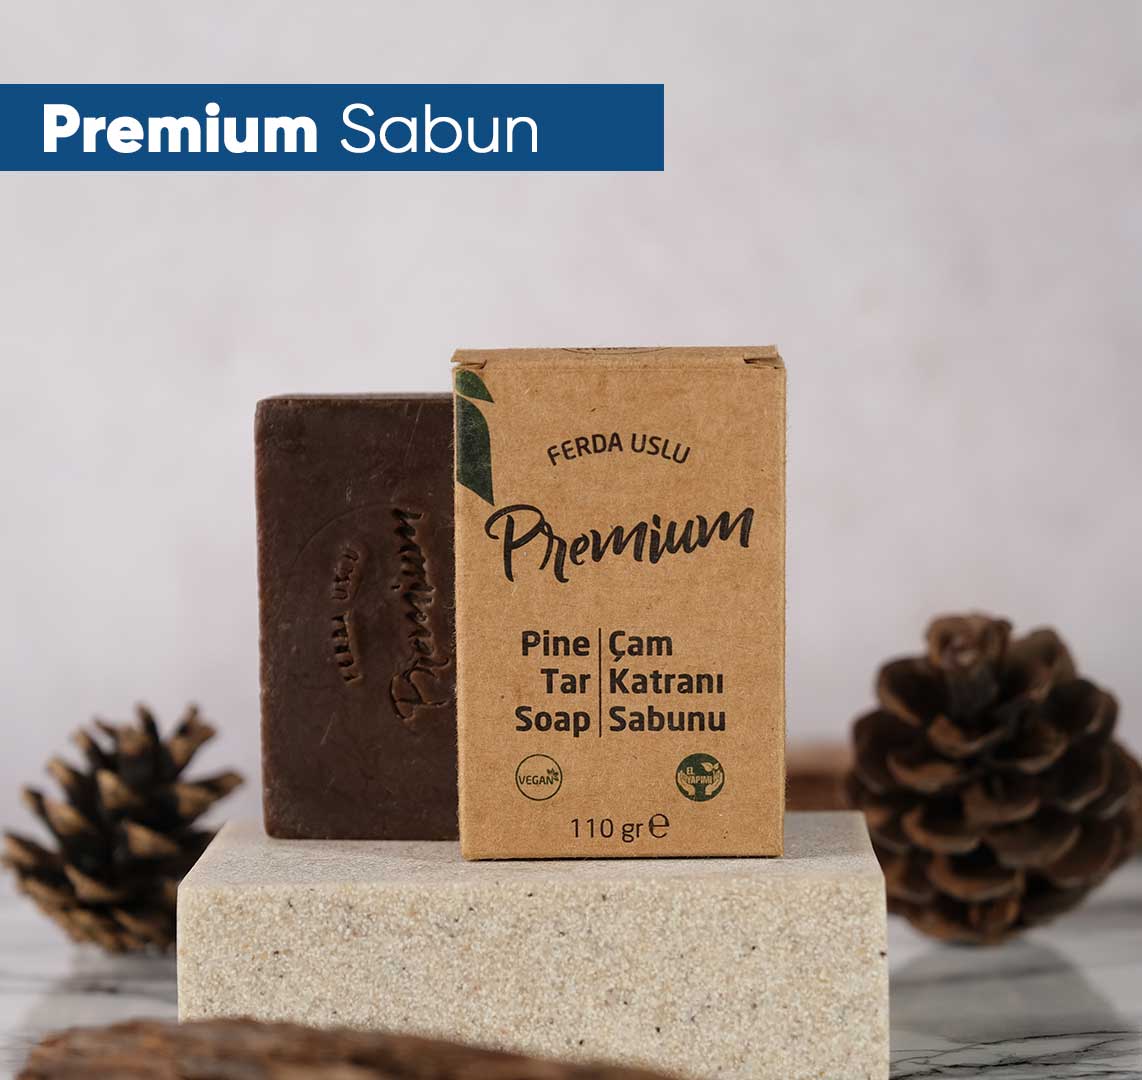 Premium Sabun